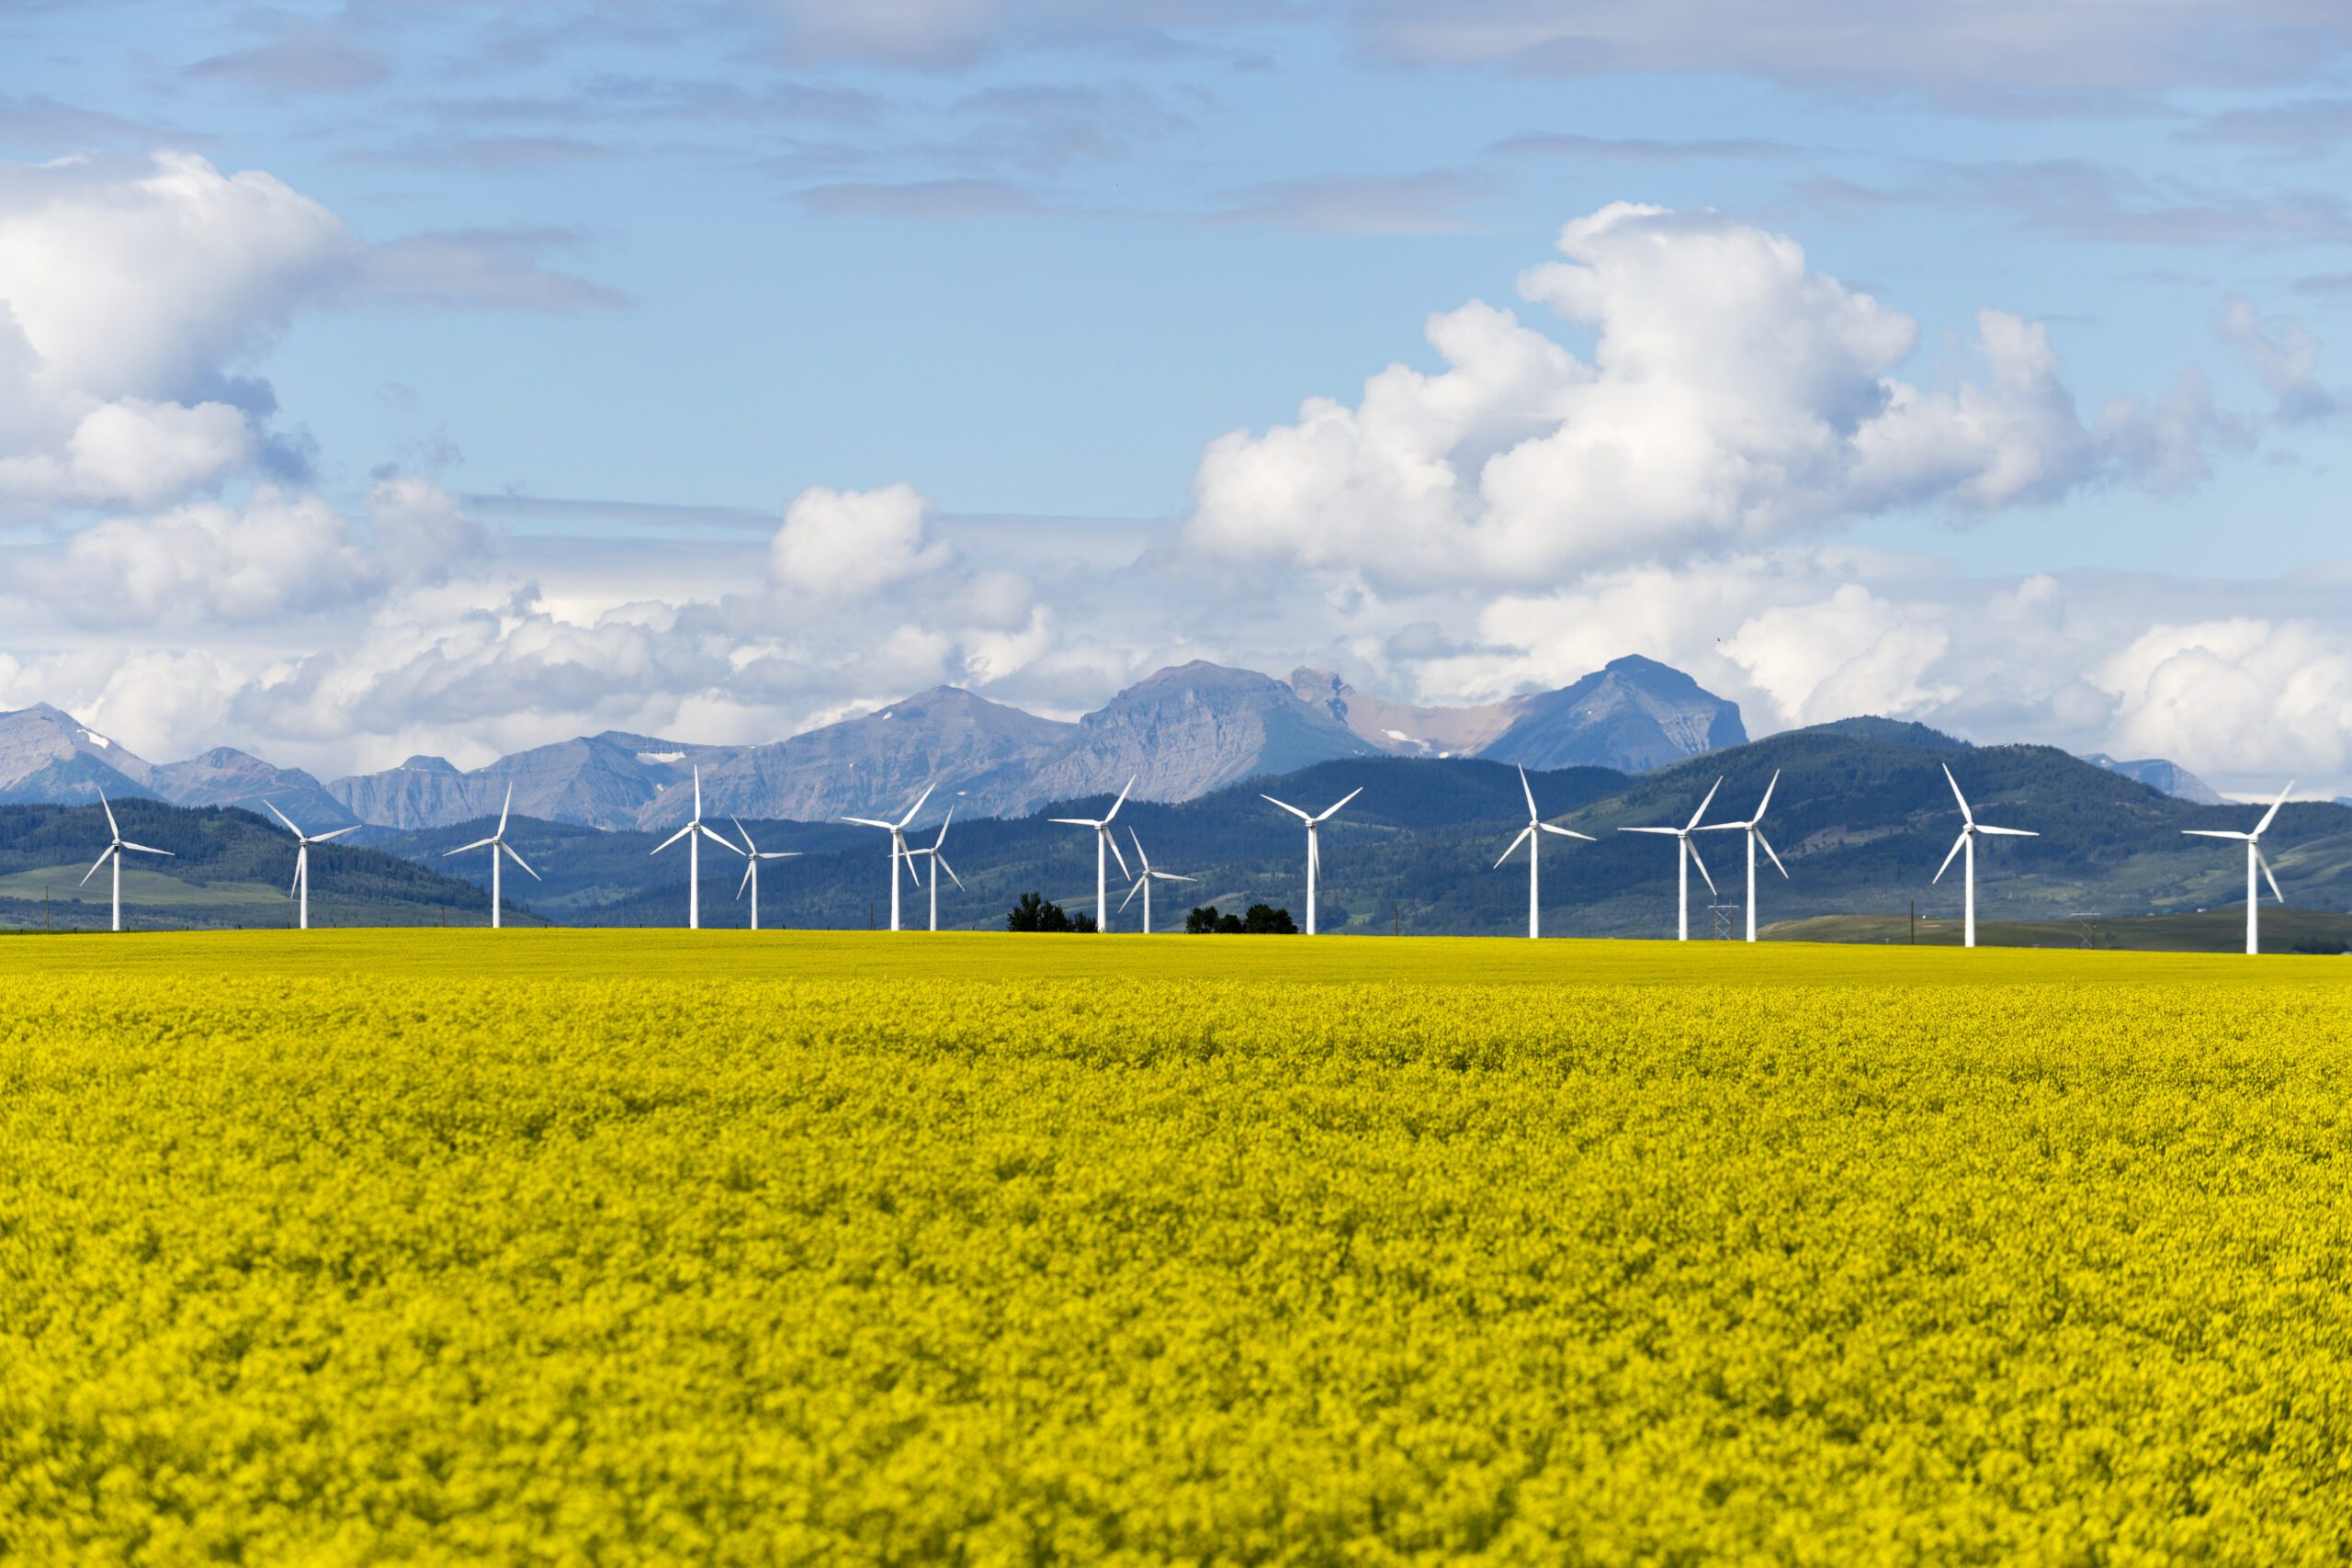 A row of wind turbines line a yellow field in Alberta, Canada.